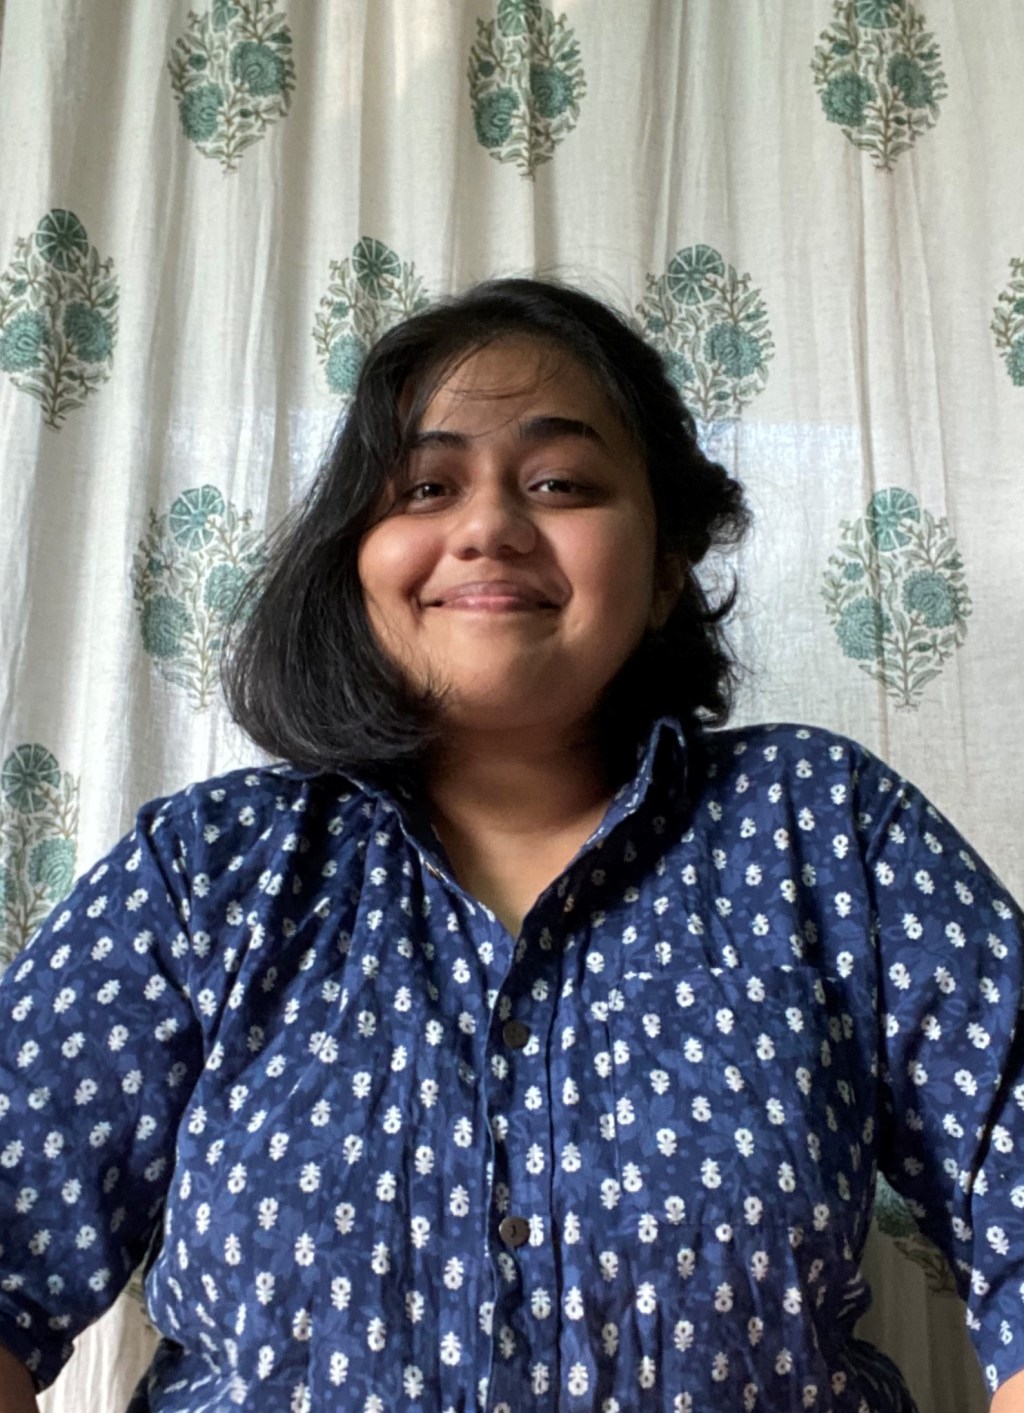 Photo of Aditi Abhijit Kulkarni smiling at the camera wearing a blue and white button down shirt.